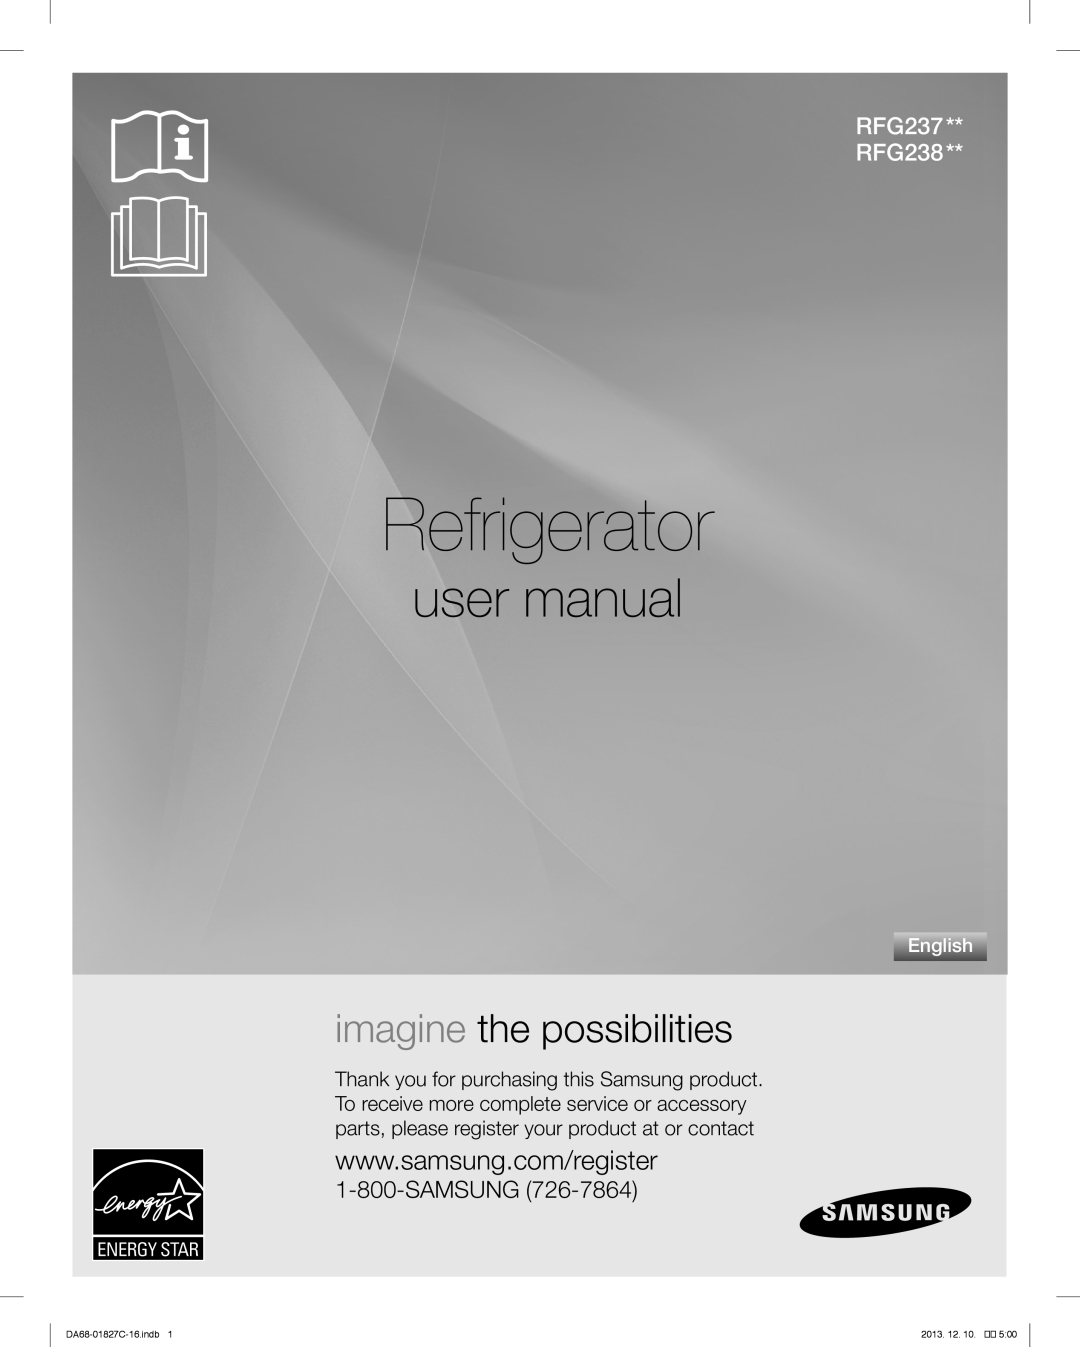 Samsung RFG237AARS user manual Refrigerator, imagine the possibilities, RFG237 RFG238, Samsung, English 